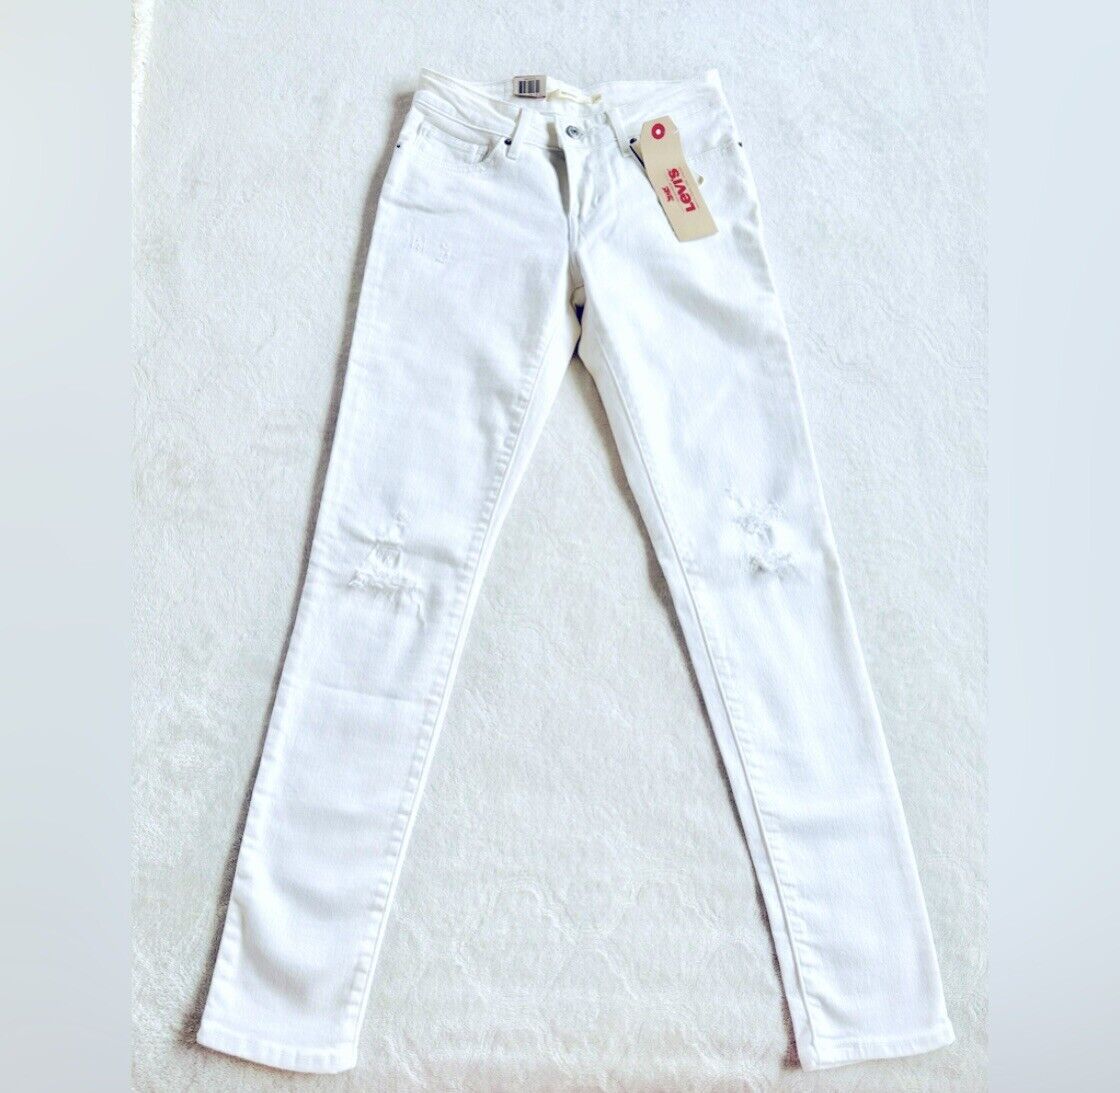 Levi's 711 Women's White Skinny Stretch Denim Jeans Size 27 S | eBay